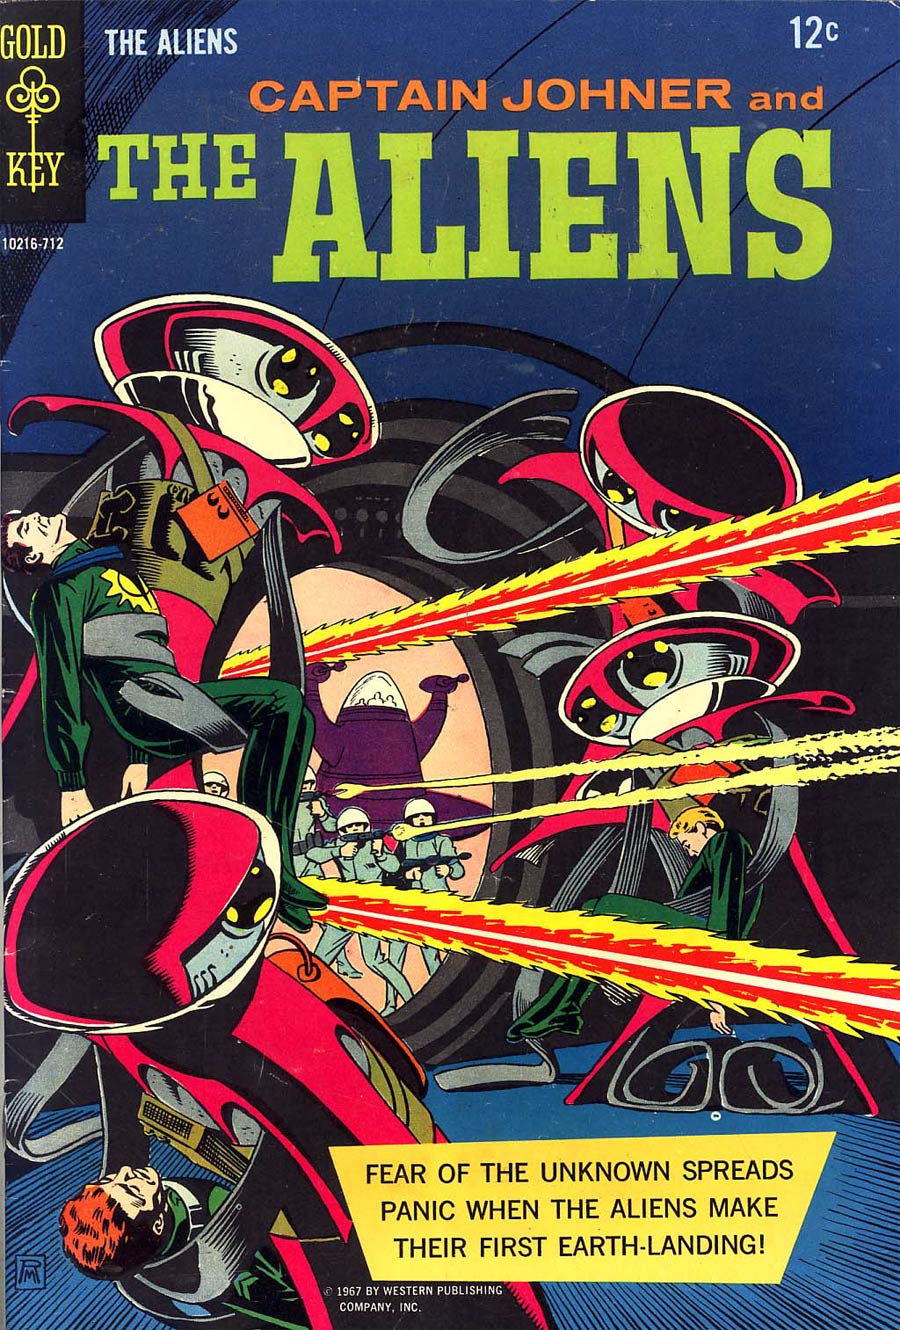 Aliens (Gold Key) #1